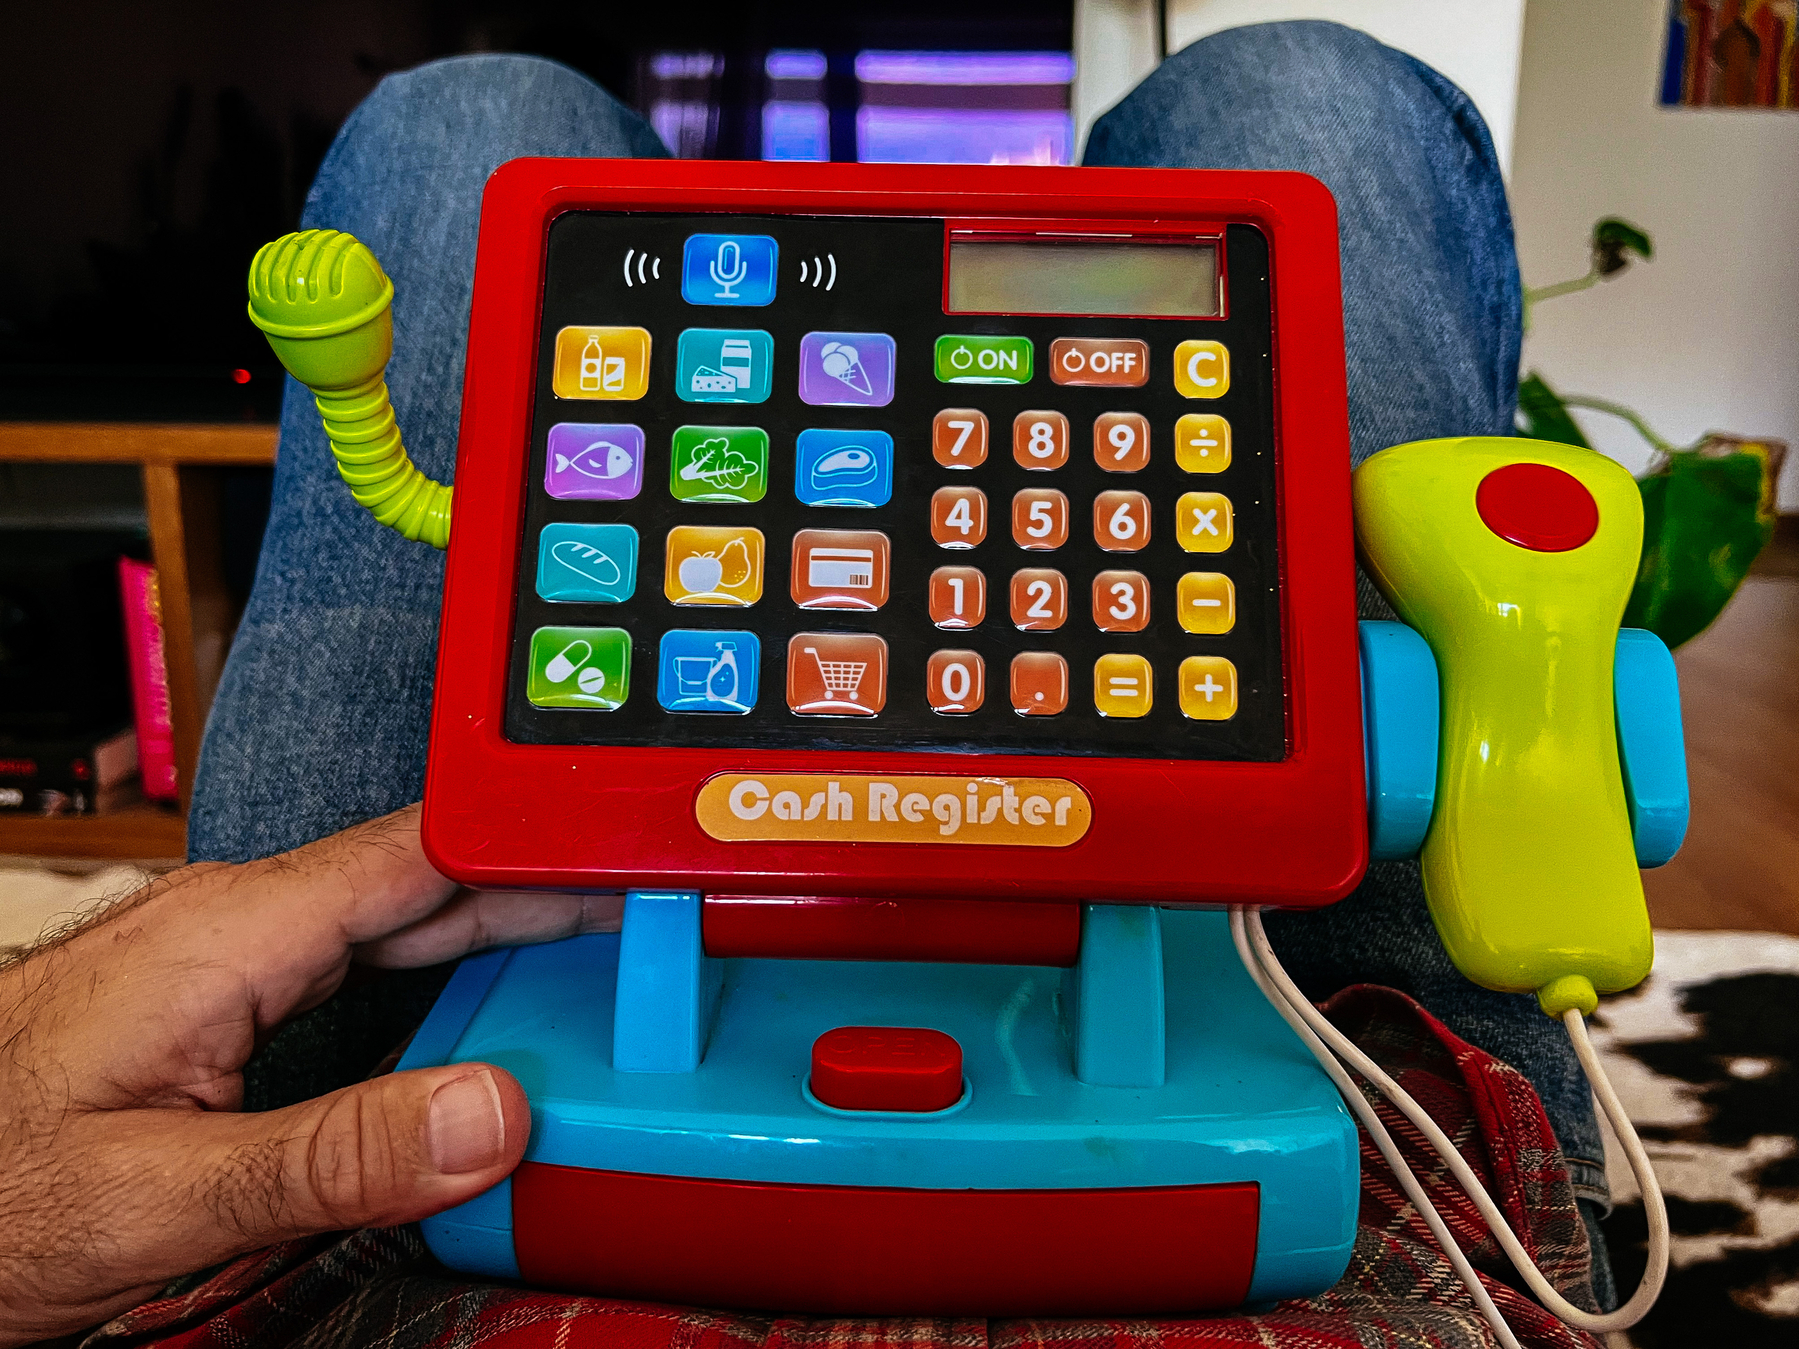 A toy cash register 